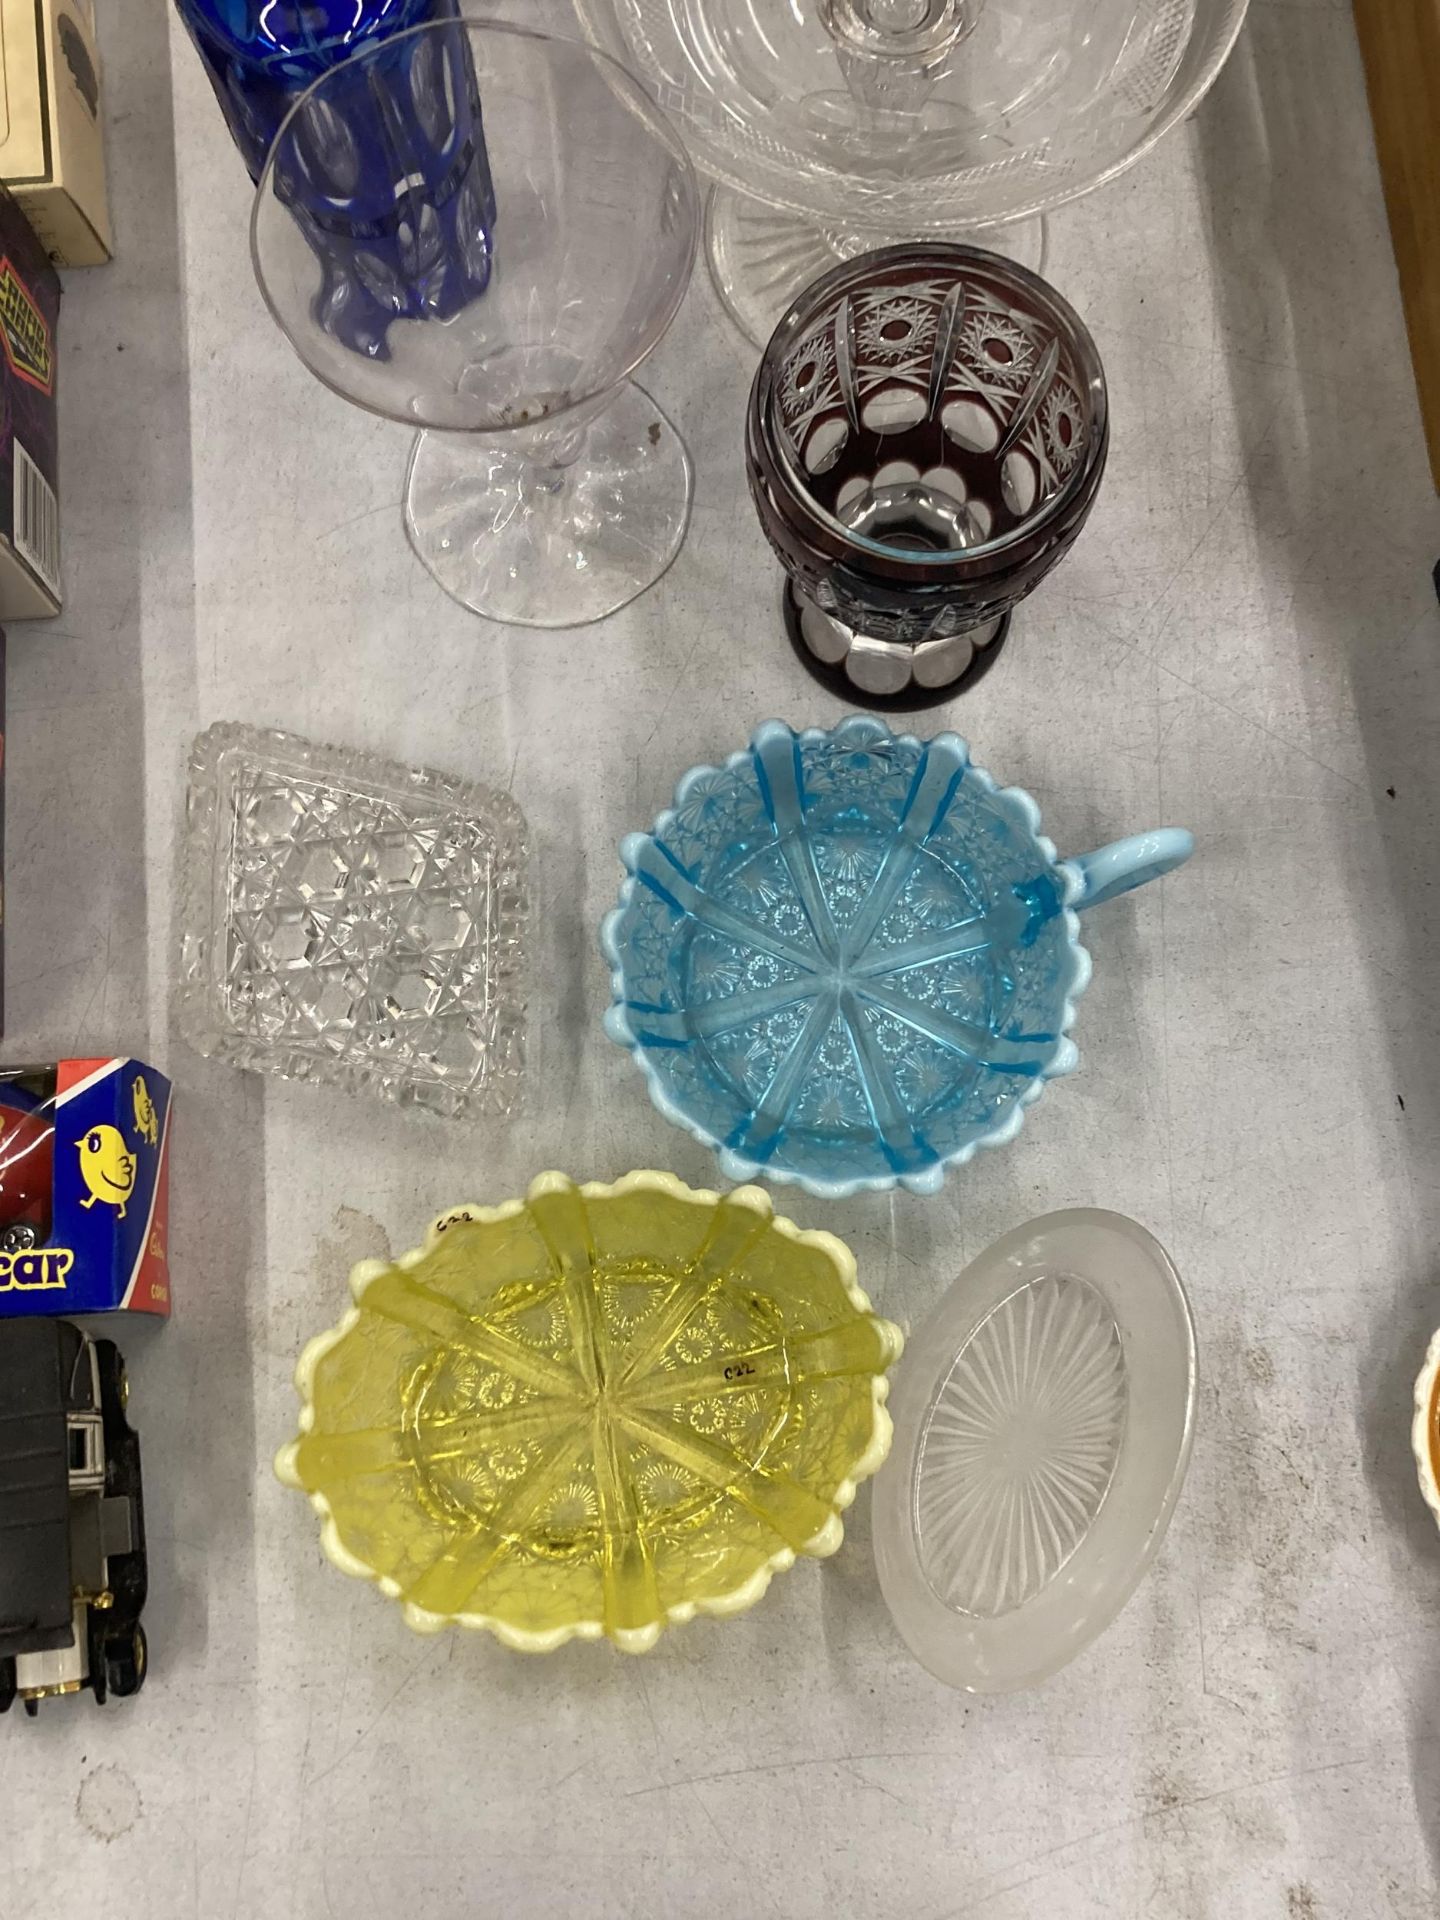 A QUANTITY OF GLASSWARE TO INCLUDE A TAZA DISH, VASES, BOWLS, GLASSES, ETC - Bild 2 aus 5